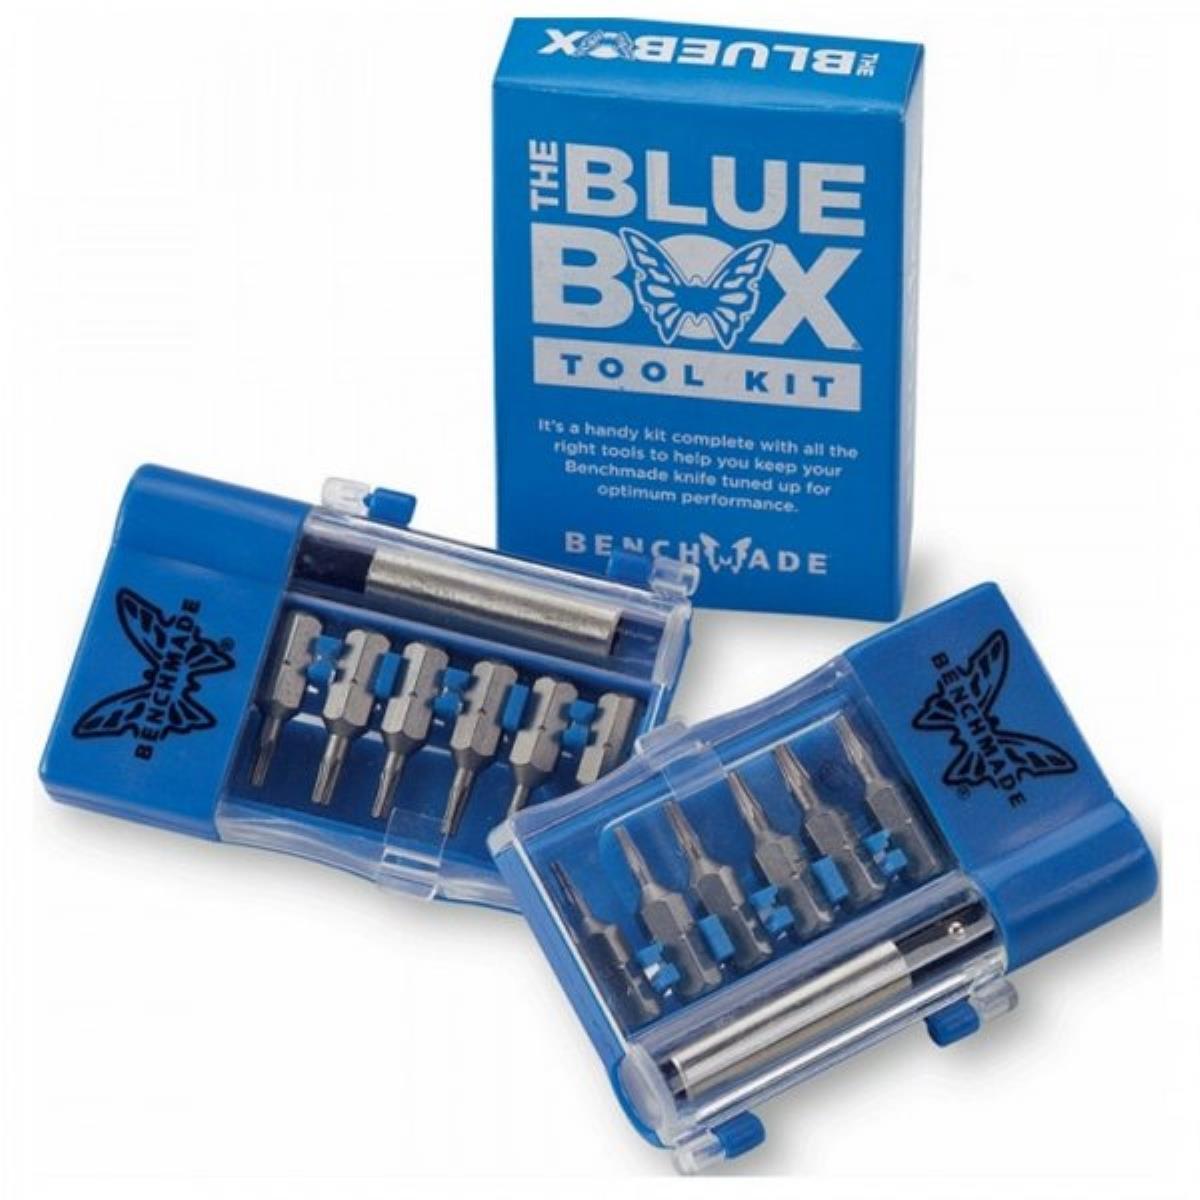 Набор бит BM981084F BlueBox Kit Benchmade набор отверток для ножей benchmade bluebox tool kit 981084f